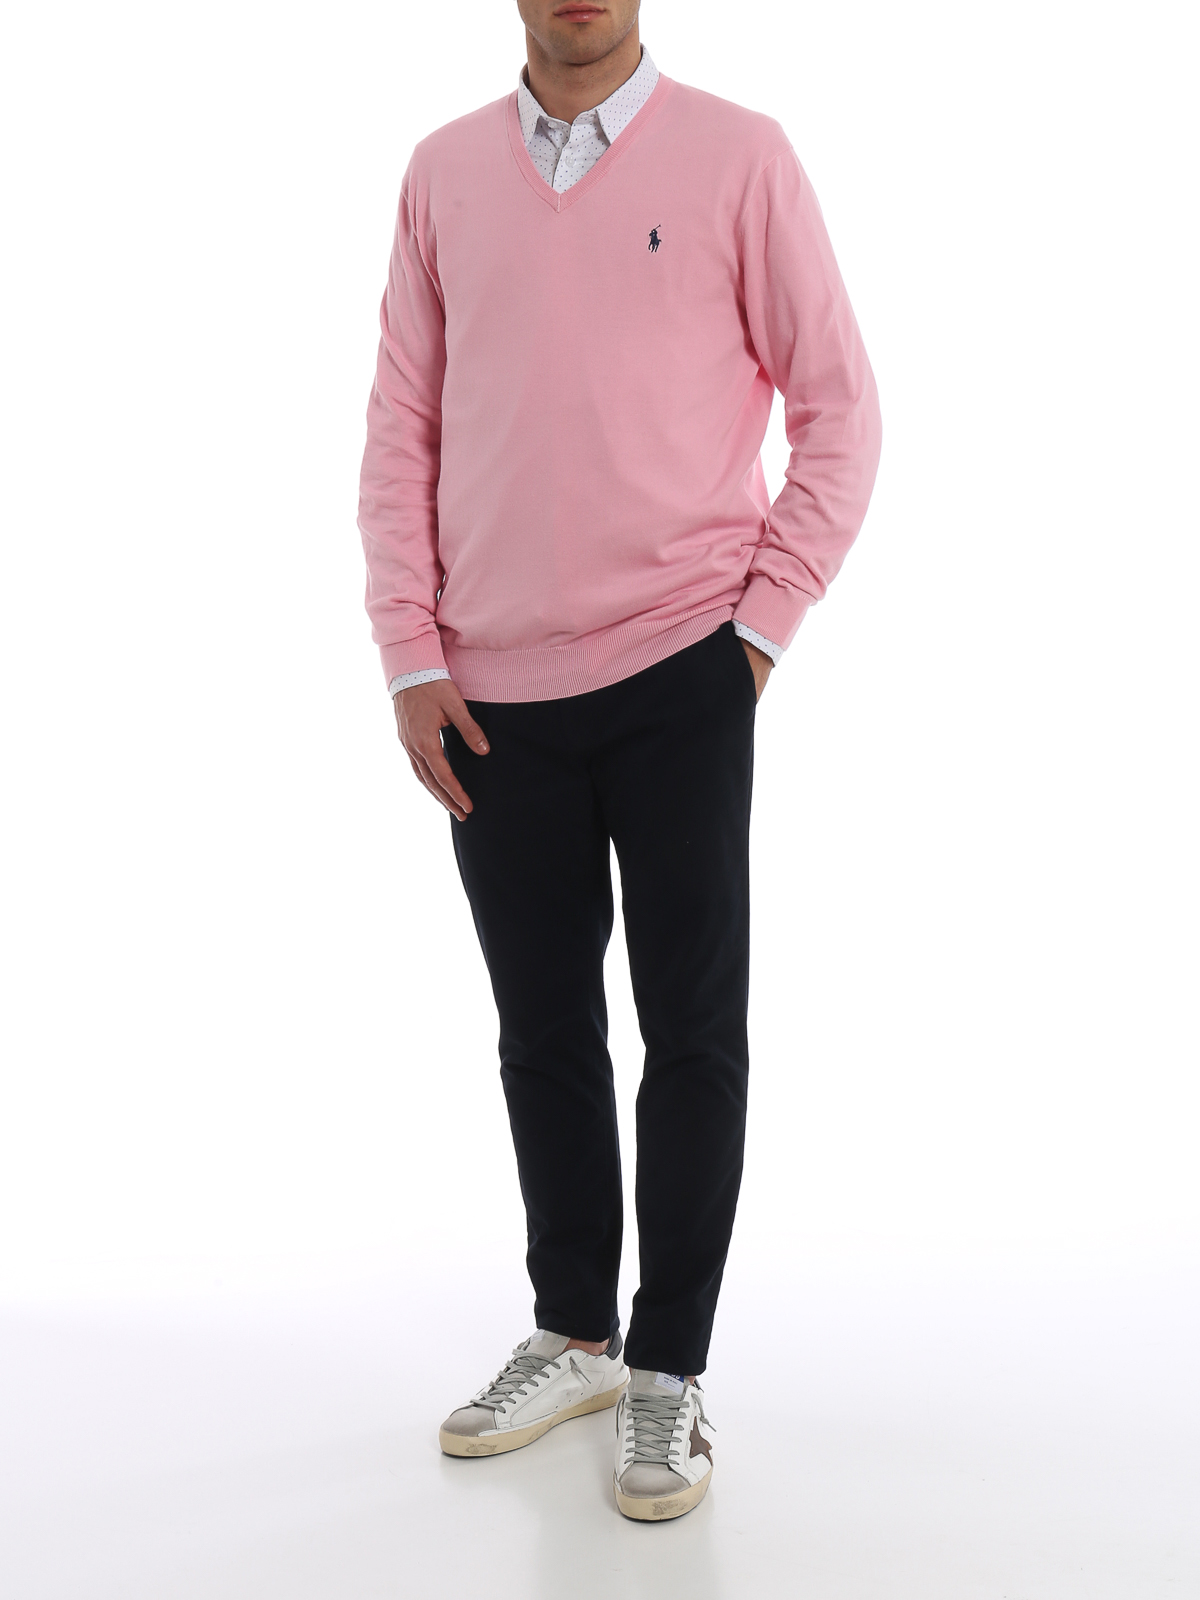 Bedrijf Wennen aan dictator V necks Polo Ralph Lauren - Slim fit candy pink cotton V-neck sweater -  710744677009